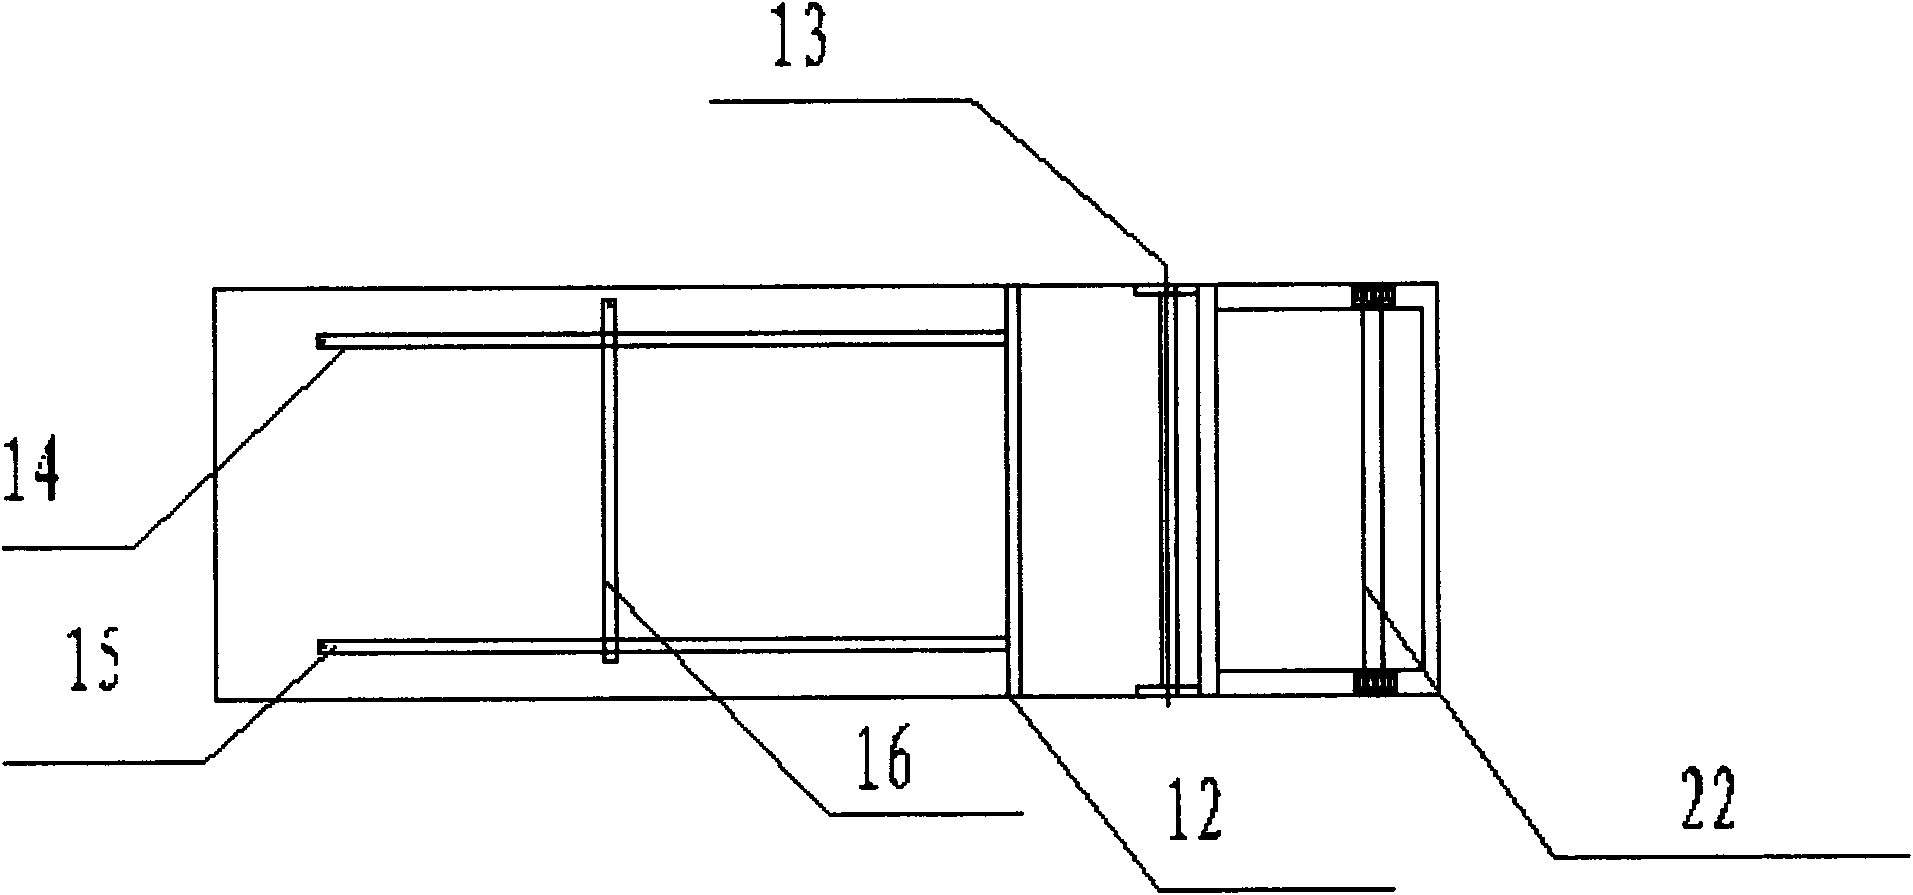 Manual cutting operating platform